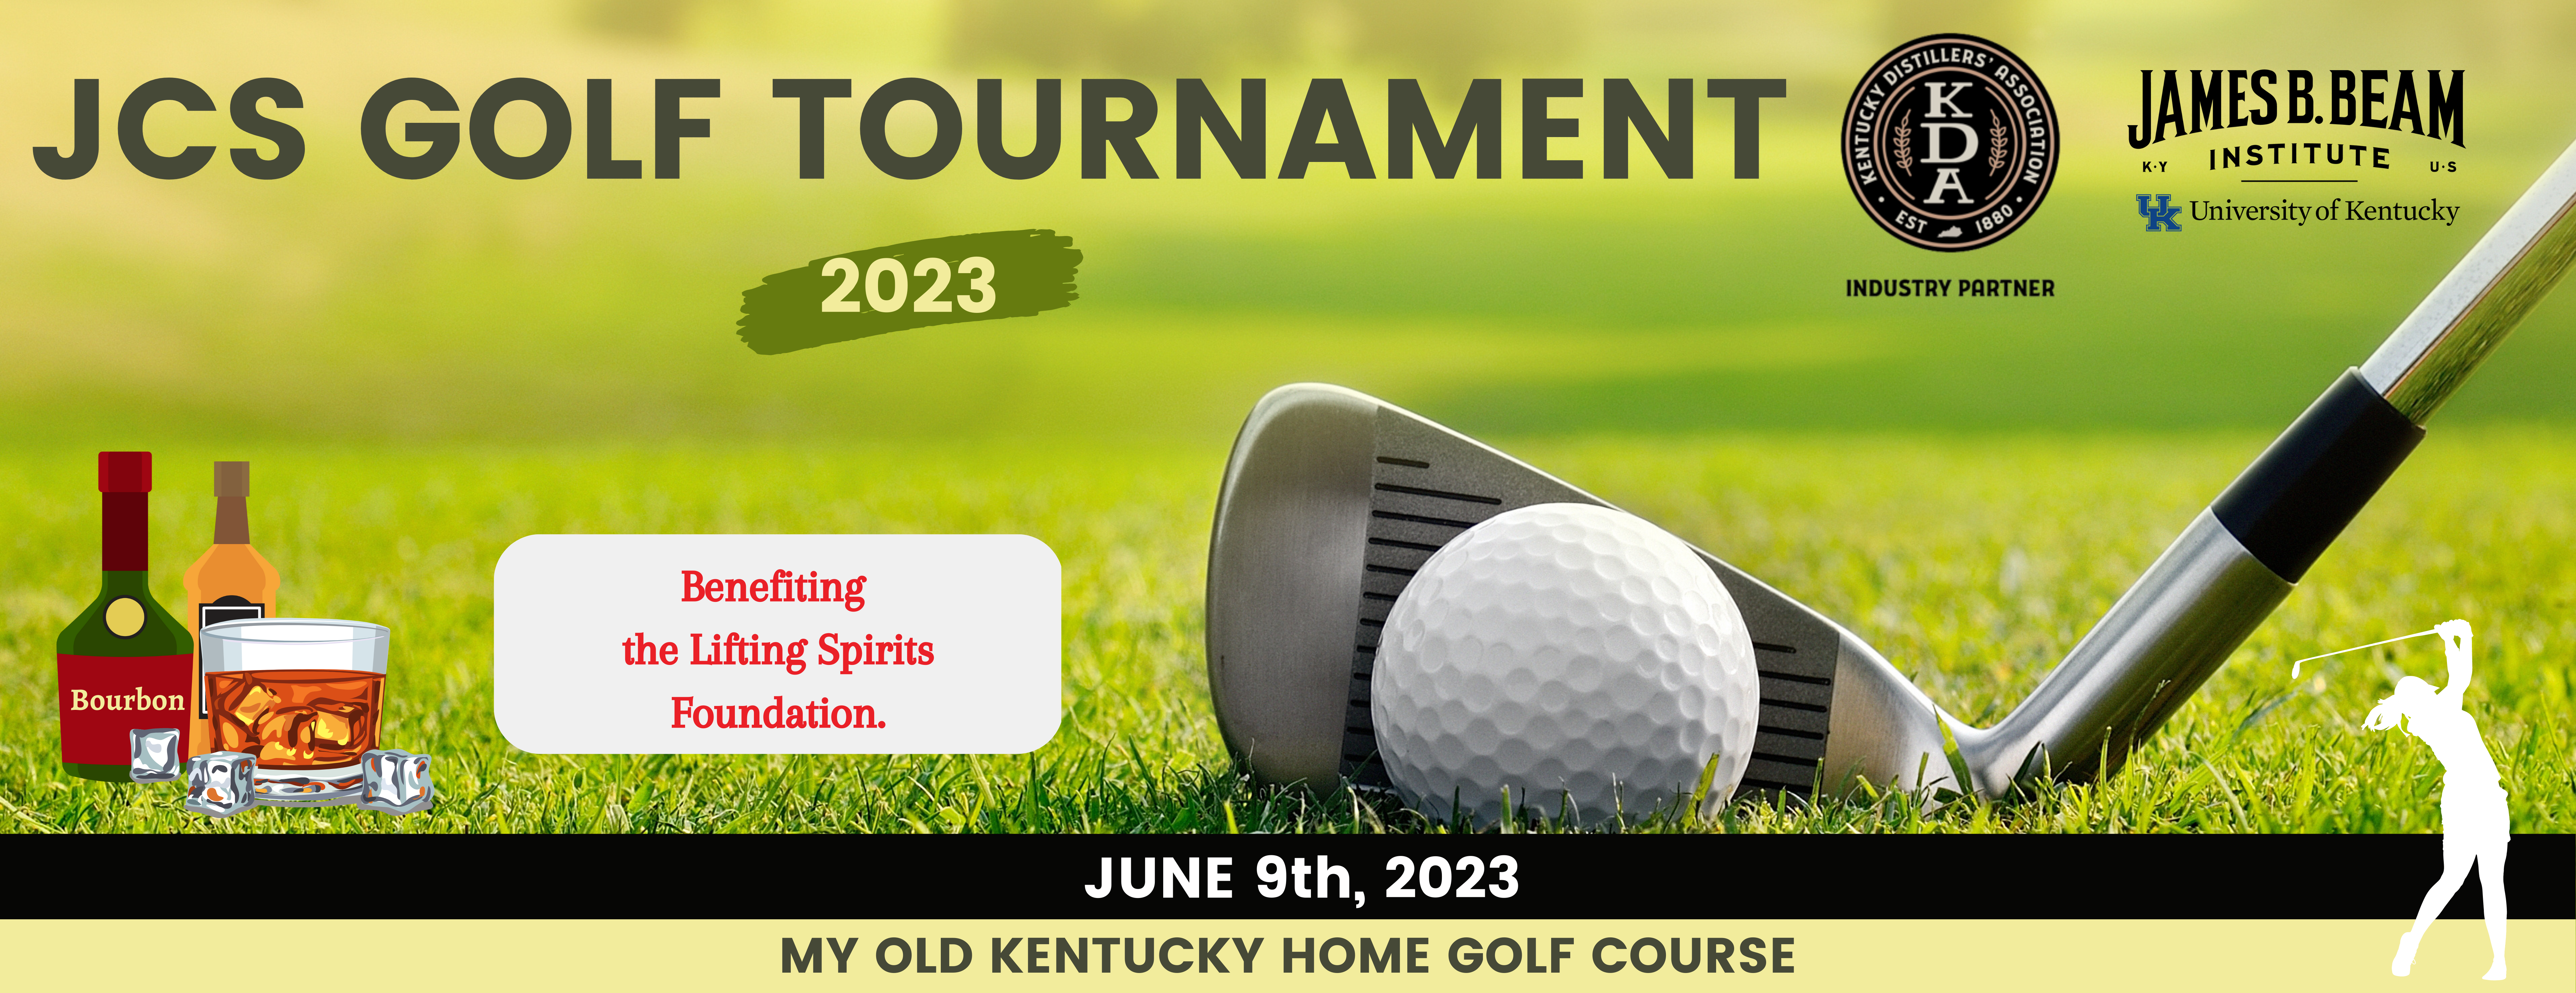 JCS Golf Tournament 2023 (18 × 24 in) (7)